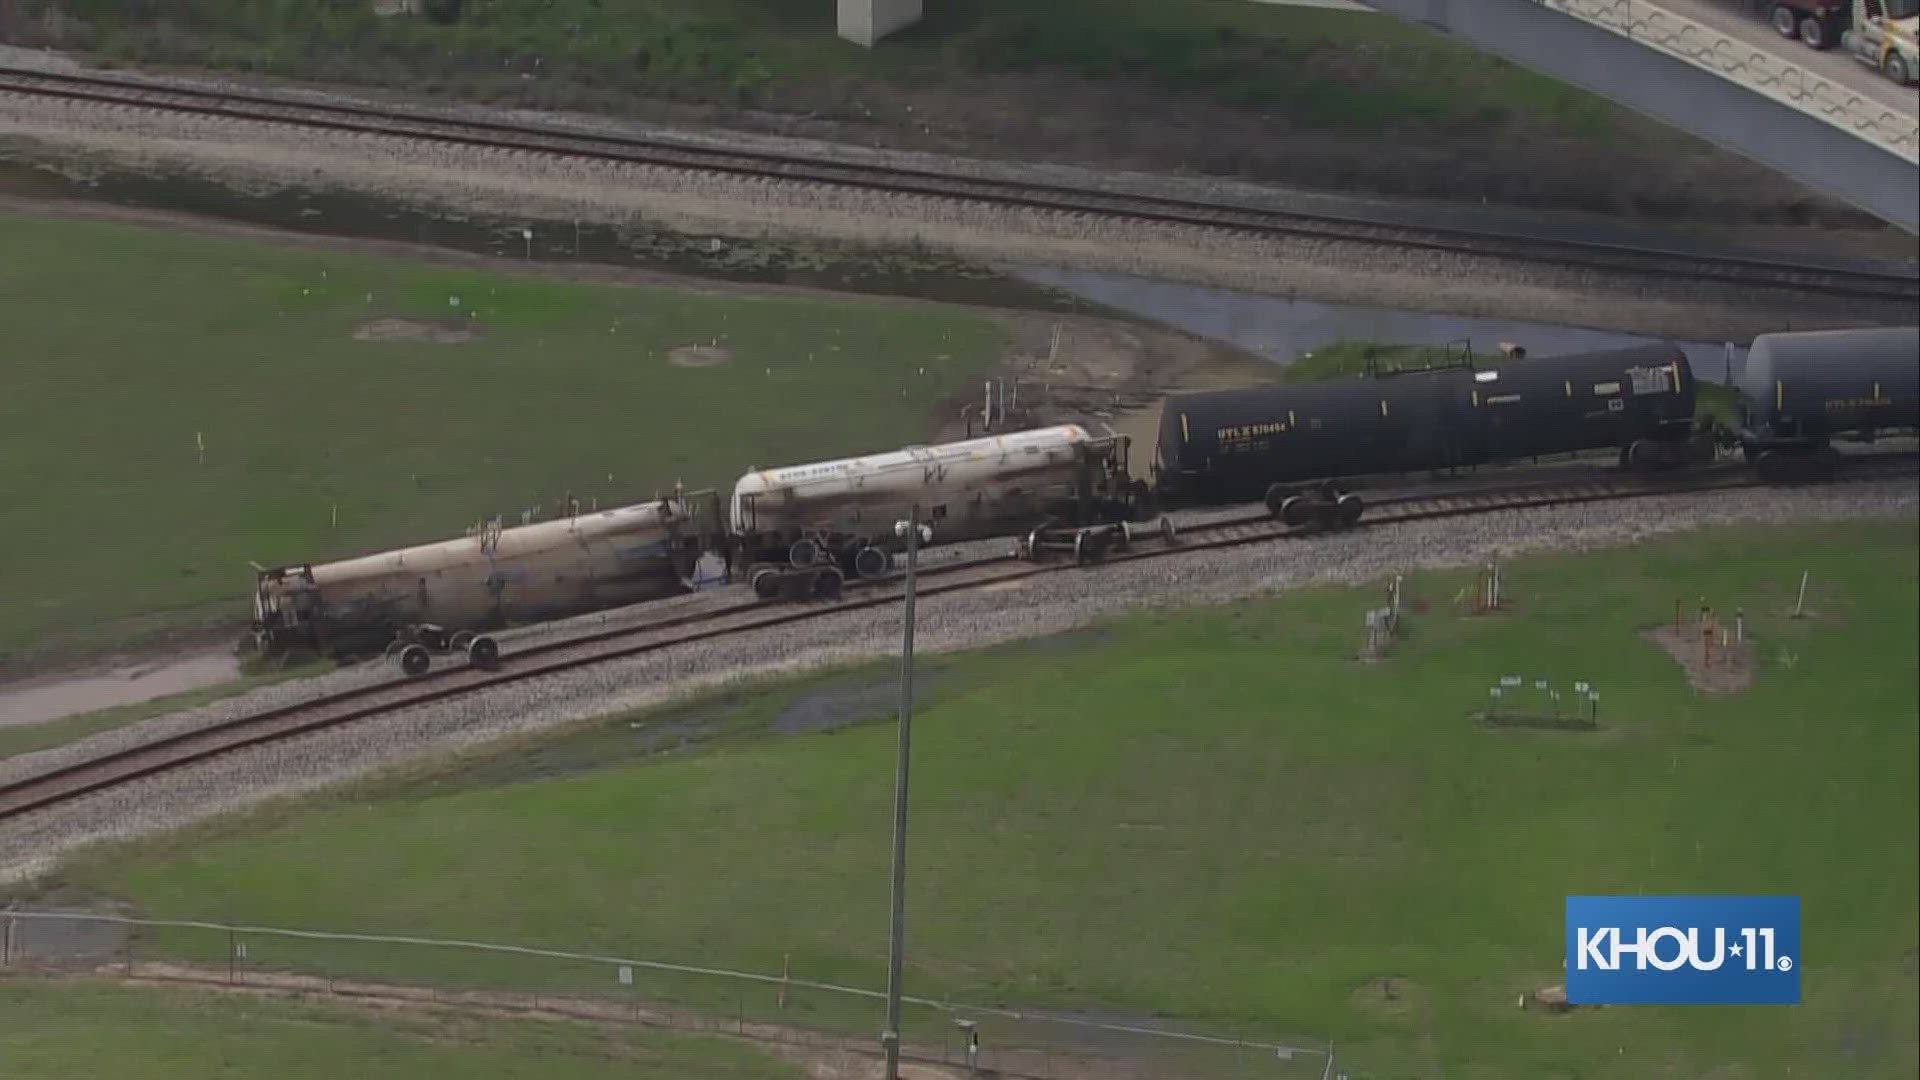 Train derailed in Seabrook, Texas | khou.com